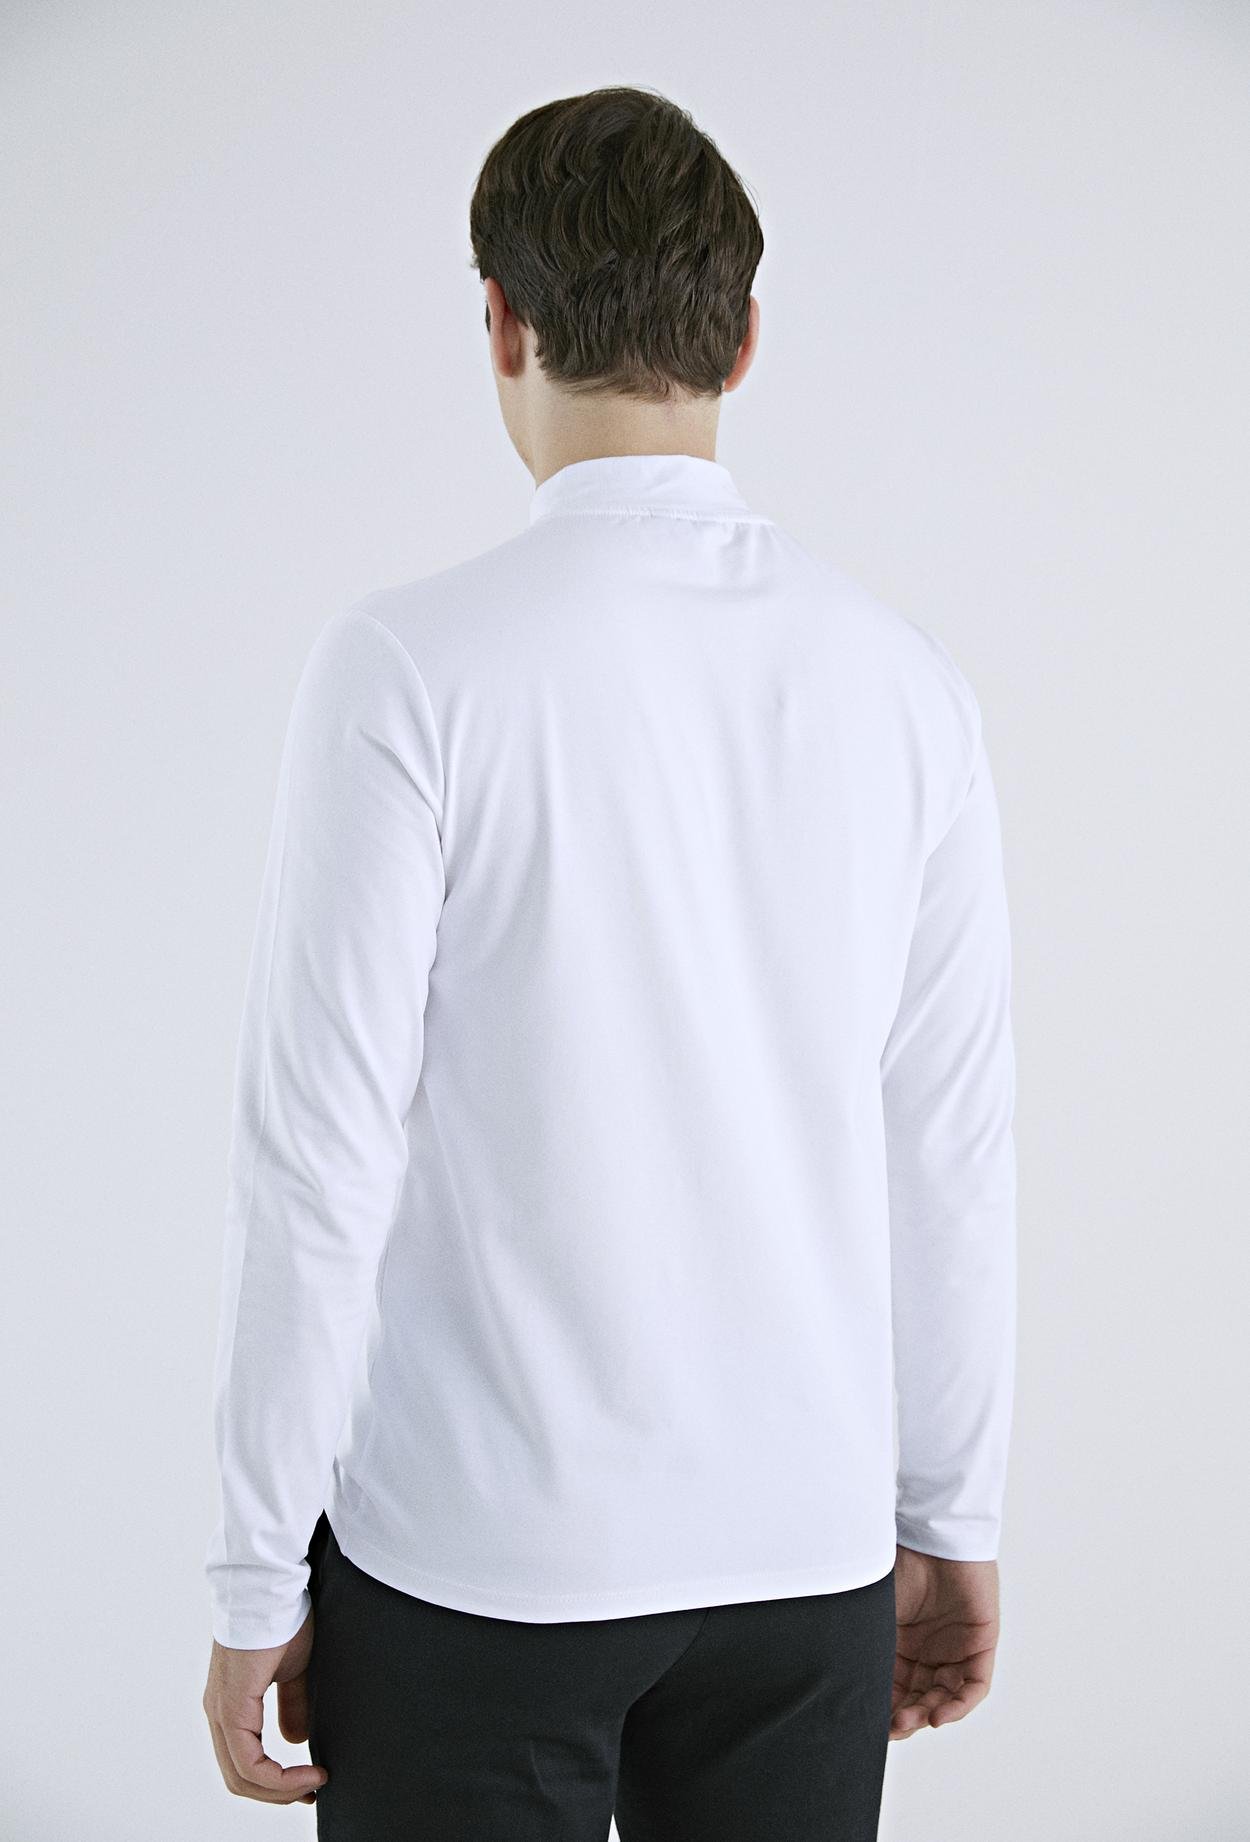 Twn Slim Fit Beyaz T-shirt